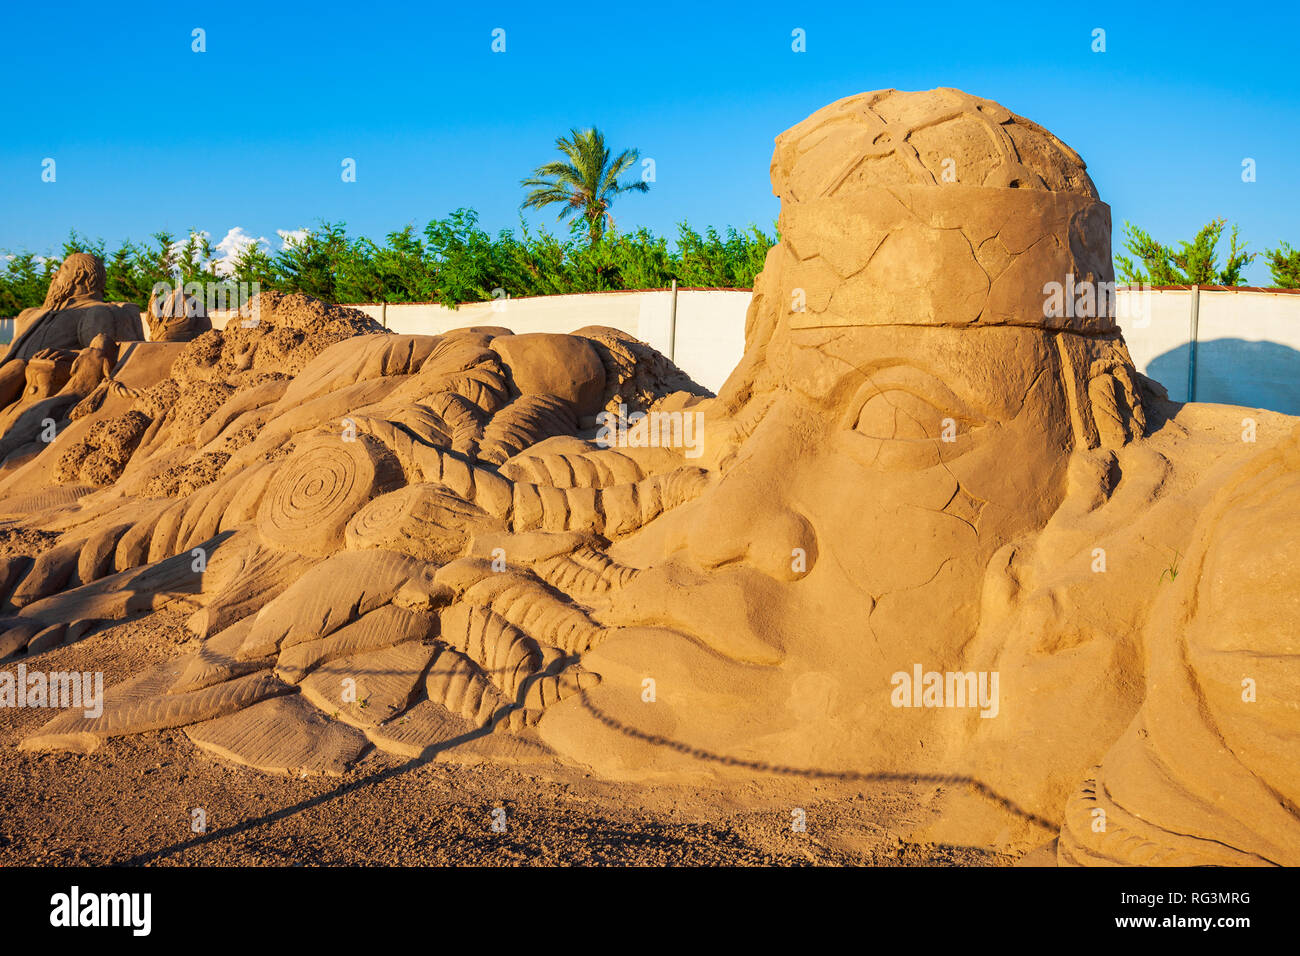 ANTALYA, TURKEY - SEPTEMBER 12, 2014: Sandland or Sand Sculpture Museum is an open air museum located at the Lara beach in Antalya city in Turkey Stock Photo